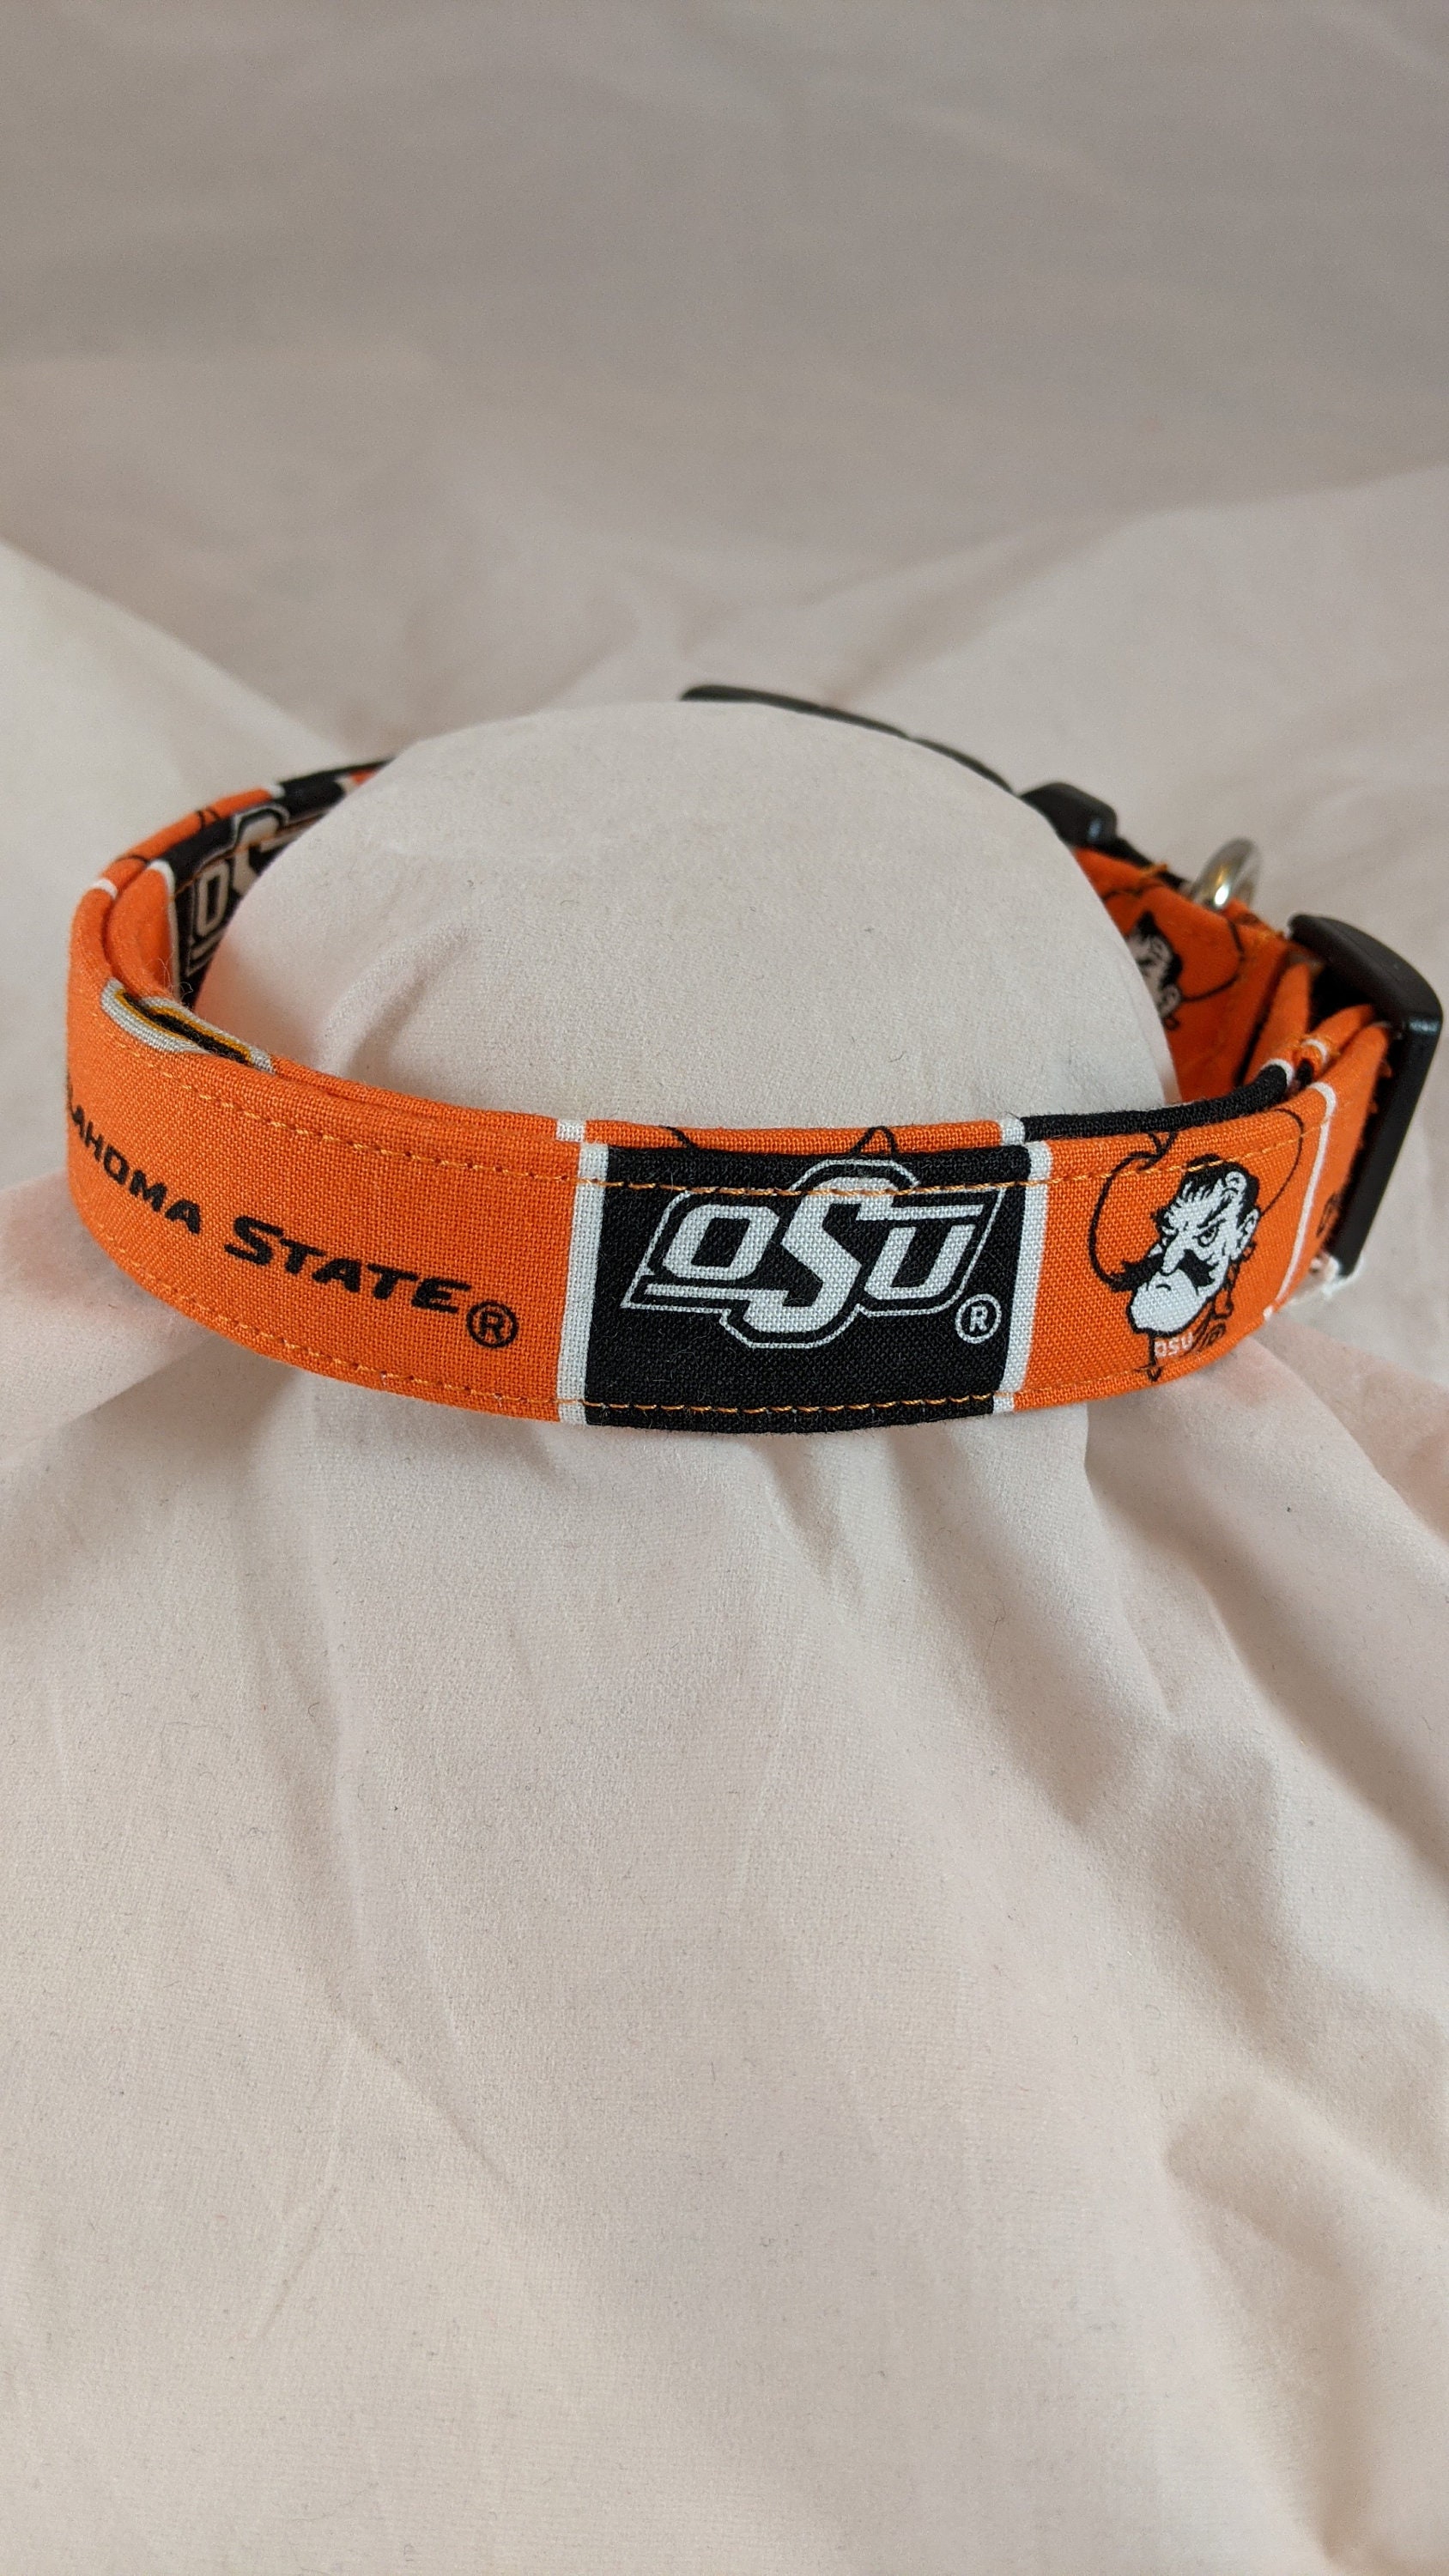 OSU Oklahoma State gift basket $75 Designed by Sassy Sanders